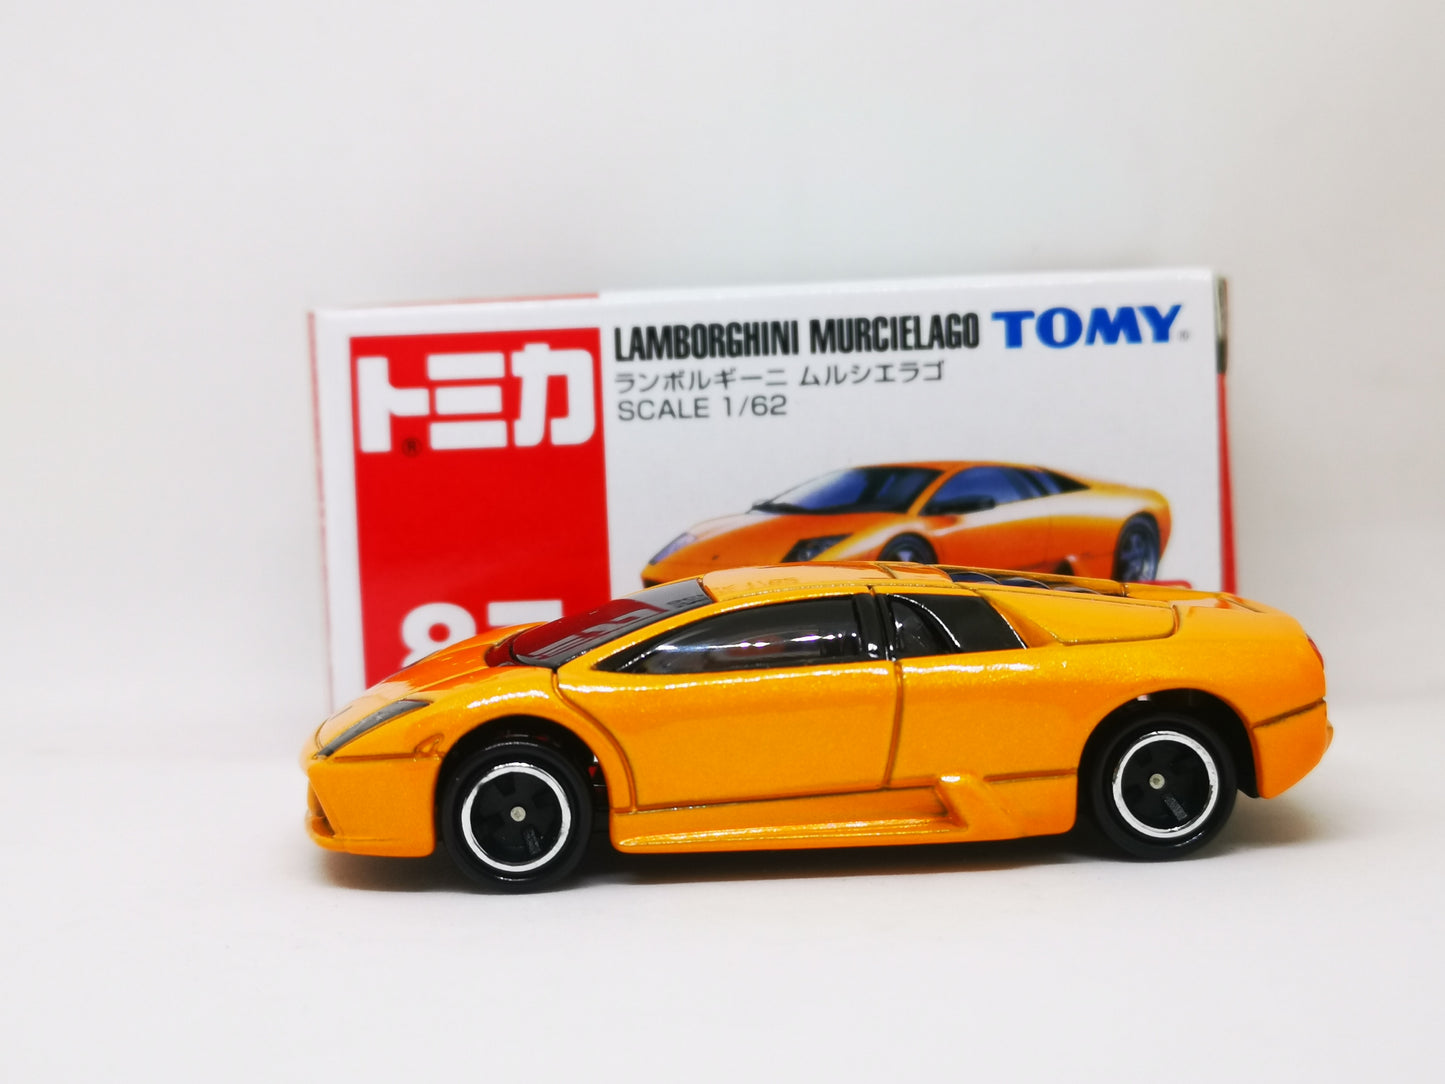 Tomica #87 Lamborghini Murcielago